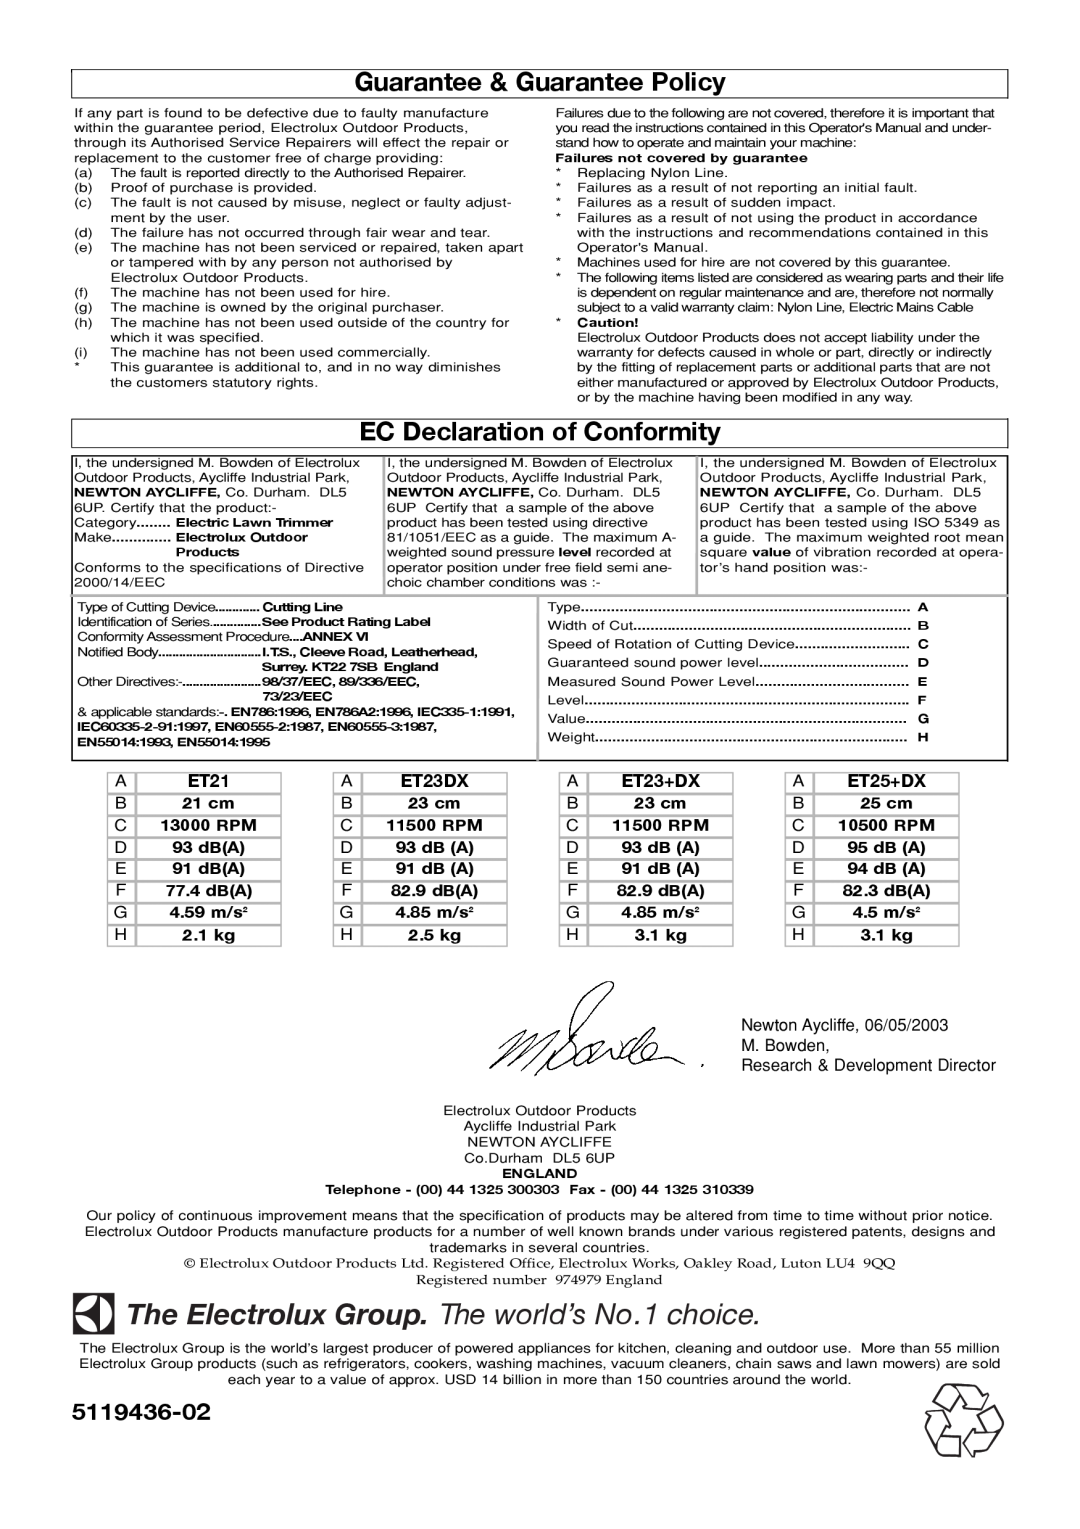 Flymo Mini Trim manual Guarantee & Guarantee Policy, EC Declaration of Conformity, A ET21, A ET23DX, A ET23+DX, A ET25+DX 